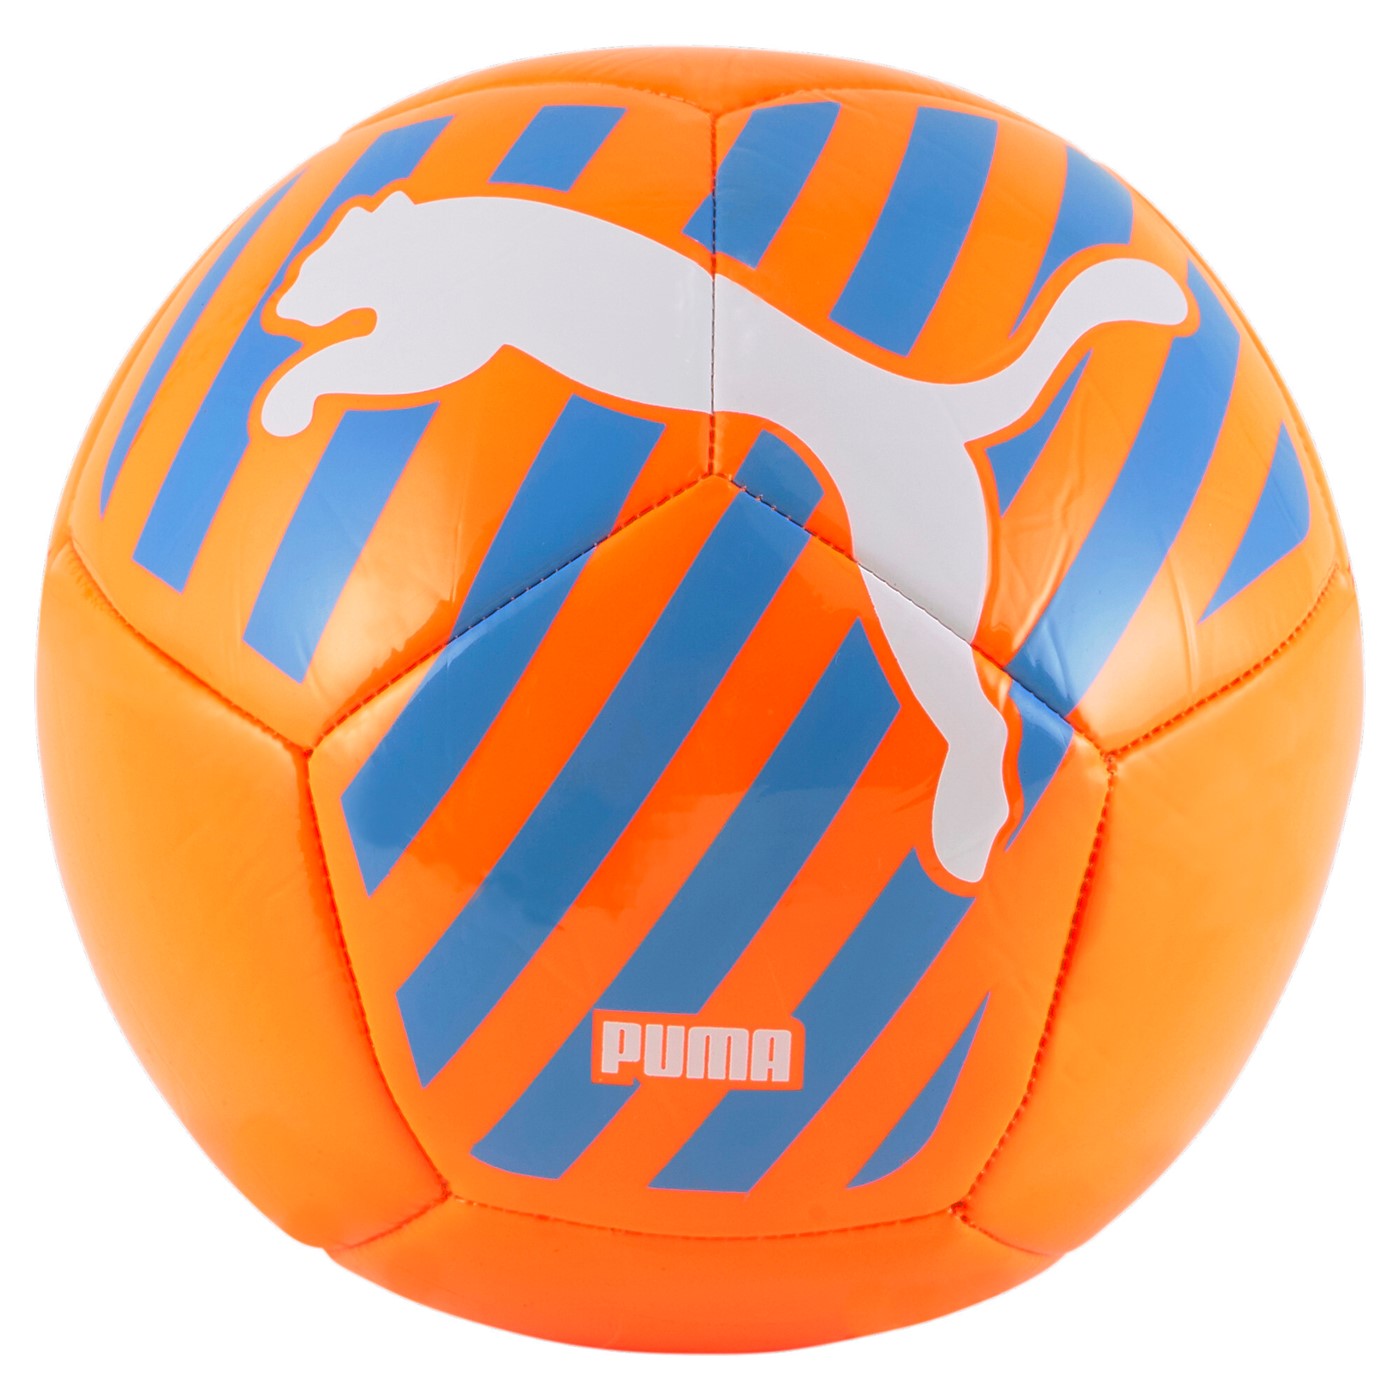 Puma Big Cat soccer ball 083994-01 ultra orange-blue glimmer Size 5